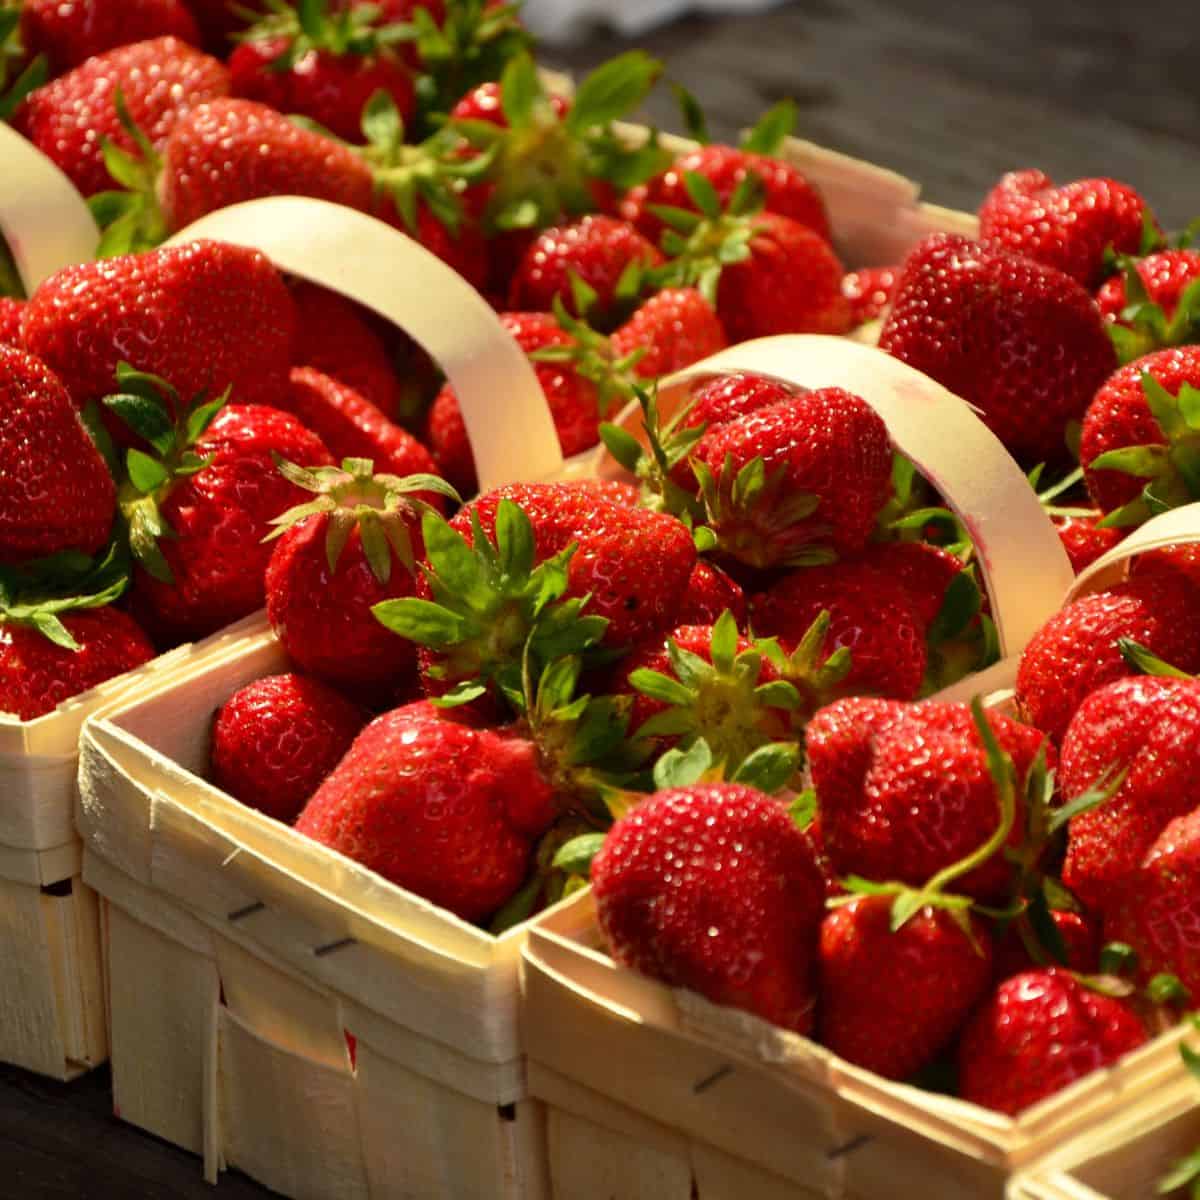 strawberries in pint baskets